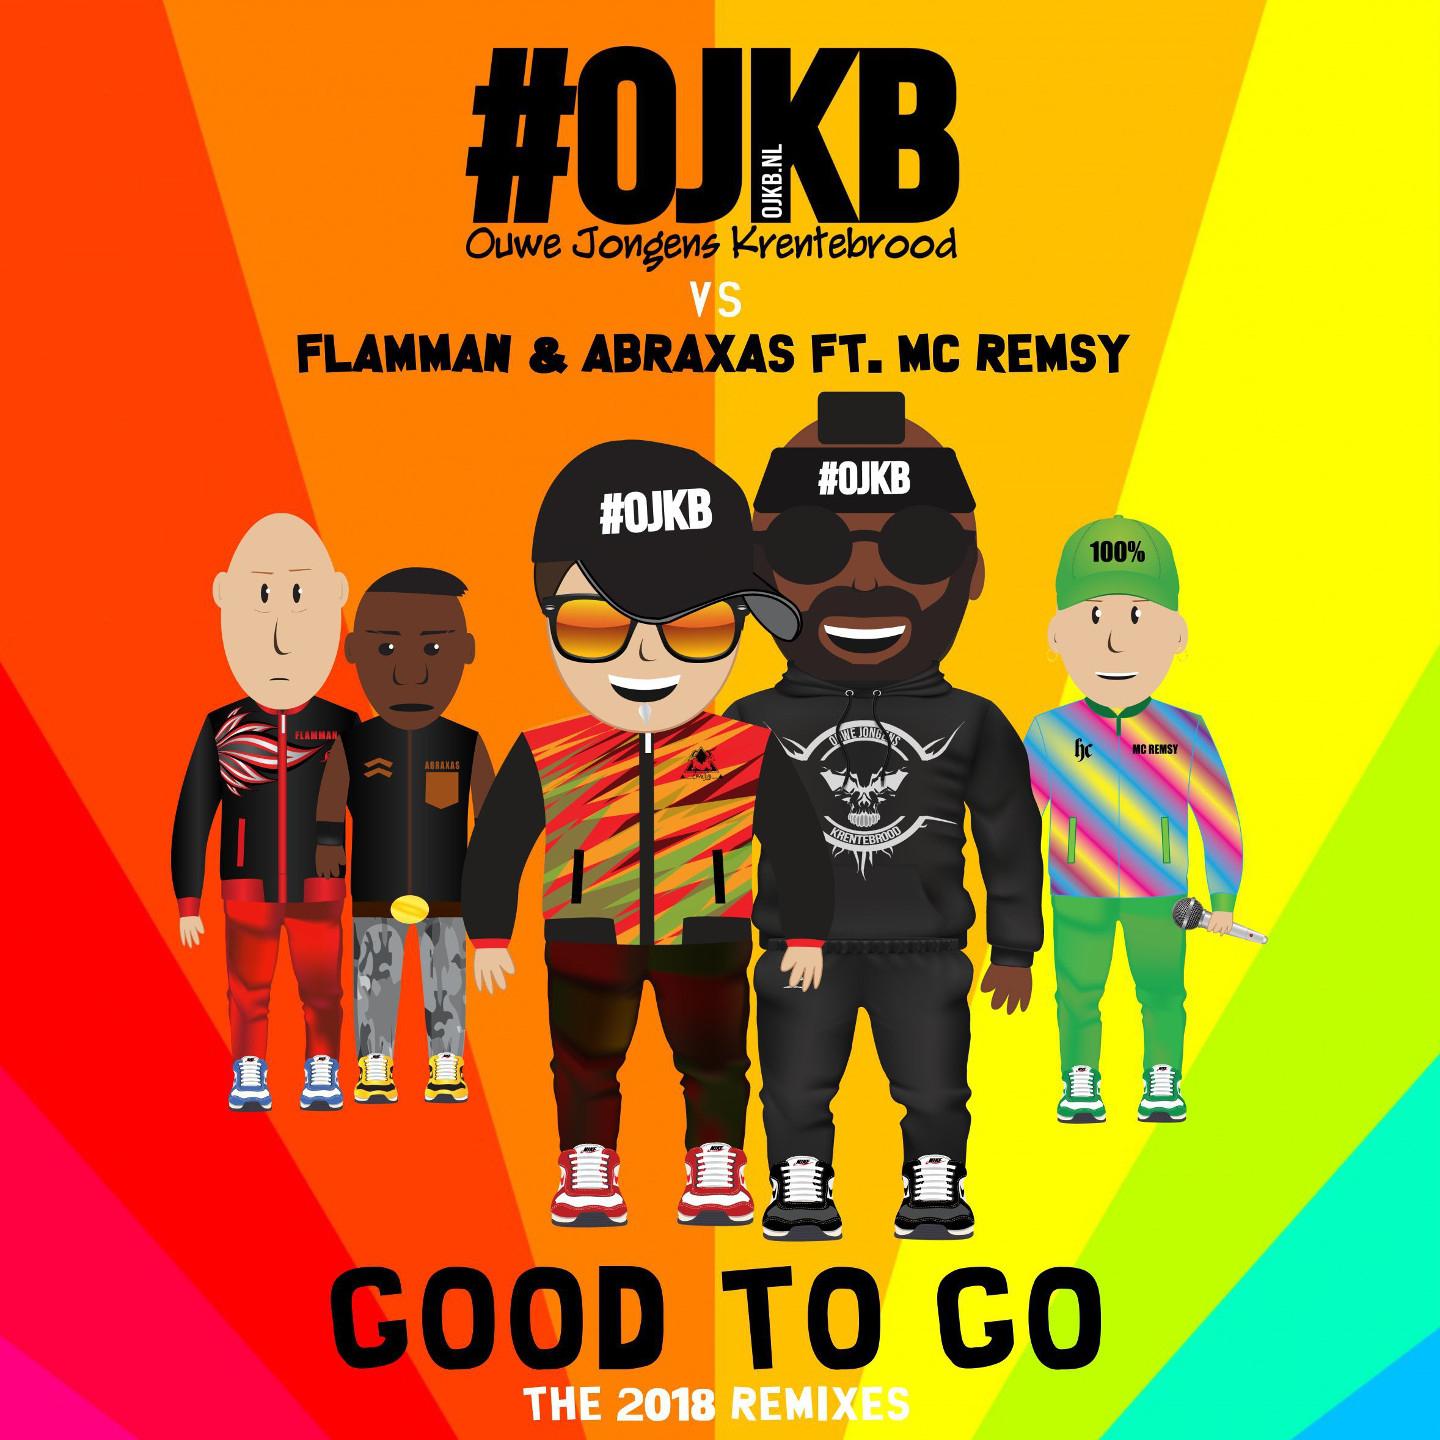 Good to Go (The 2018 Remixes)